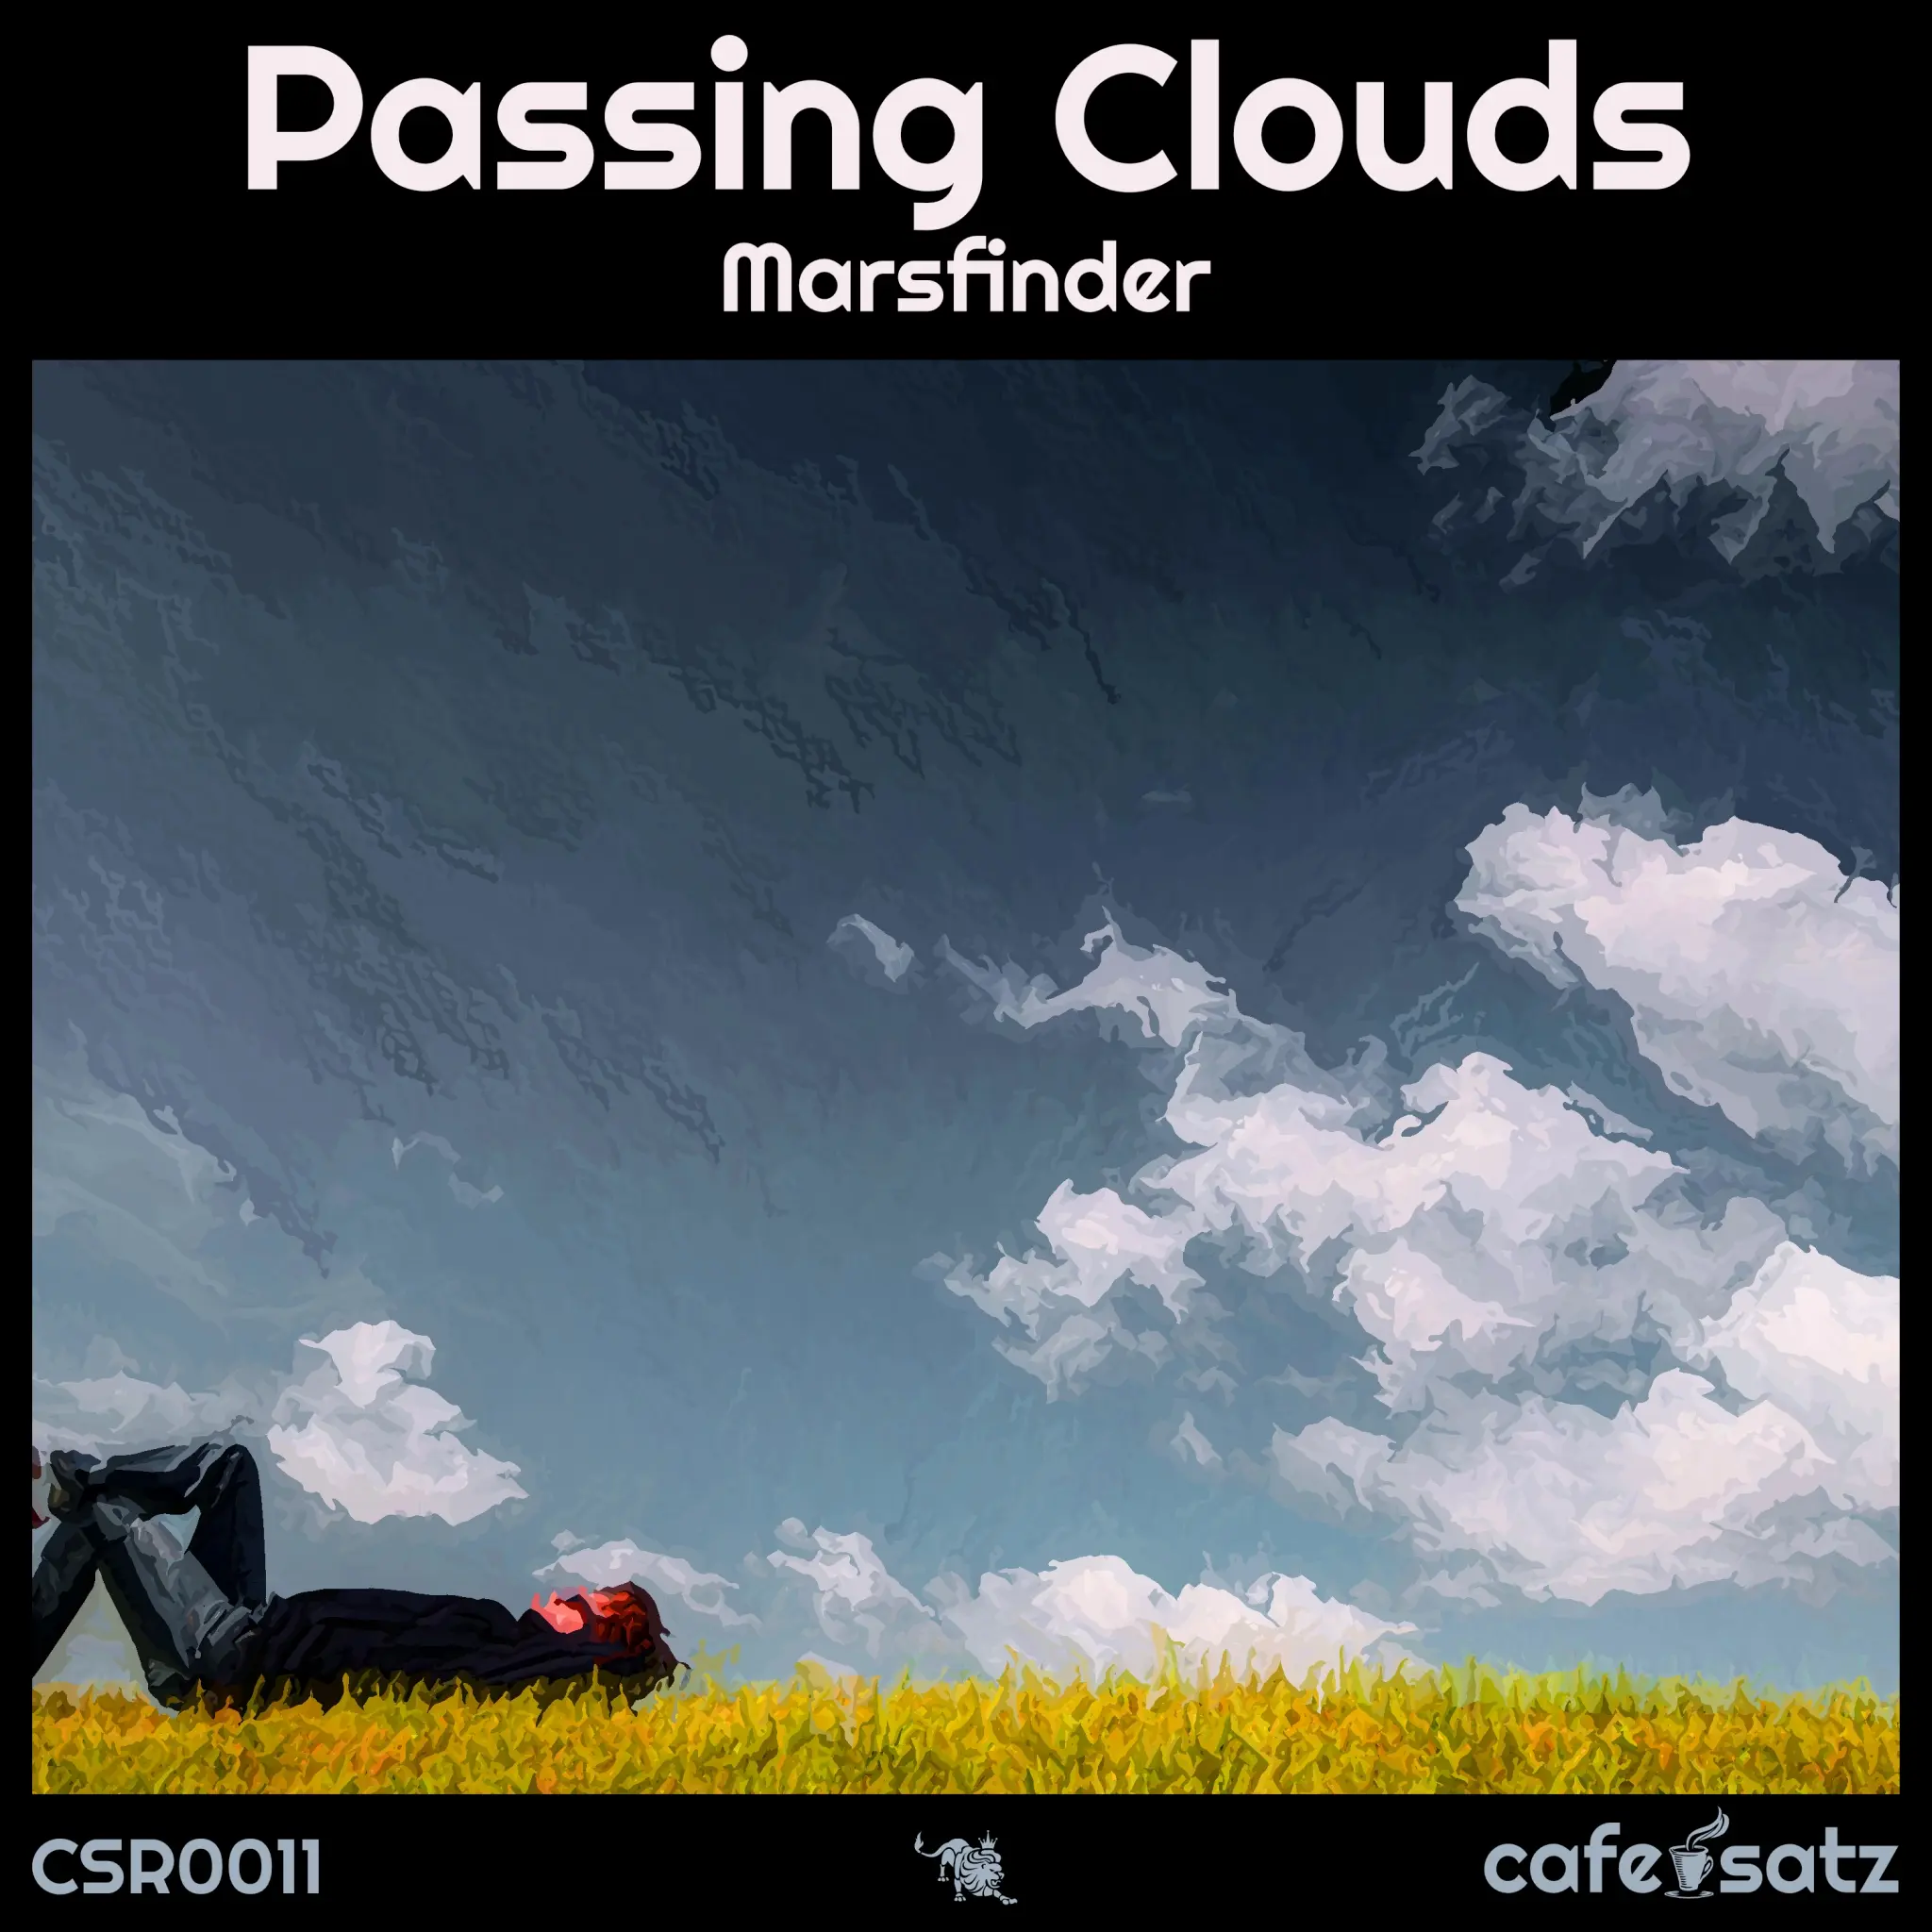 Marsfinder - Passing Clouds